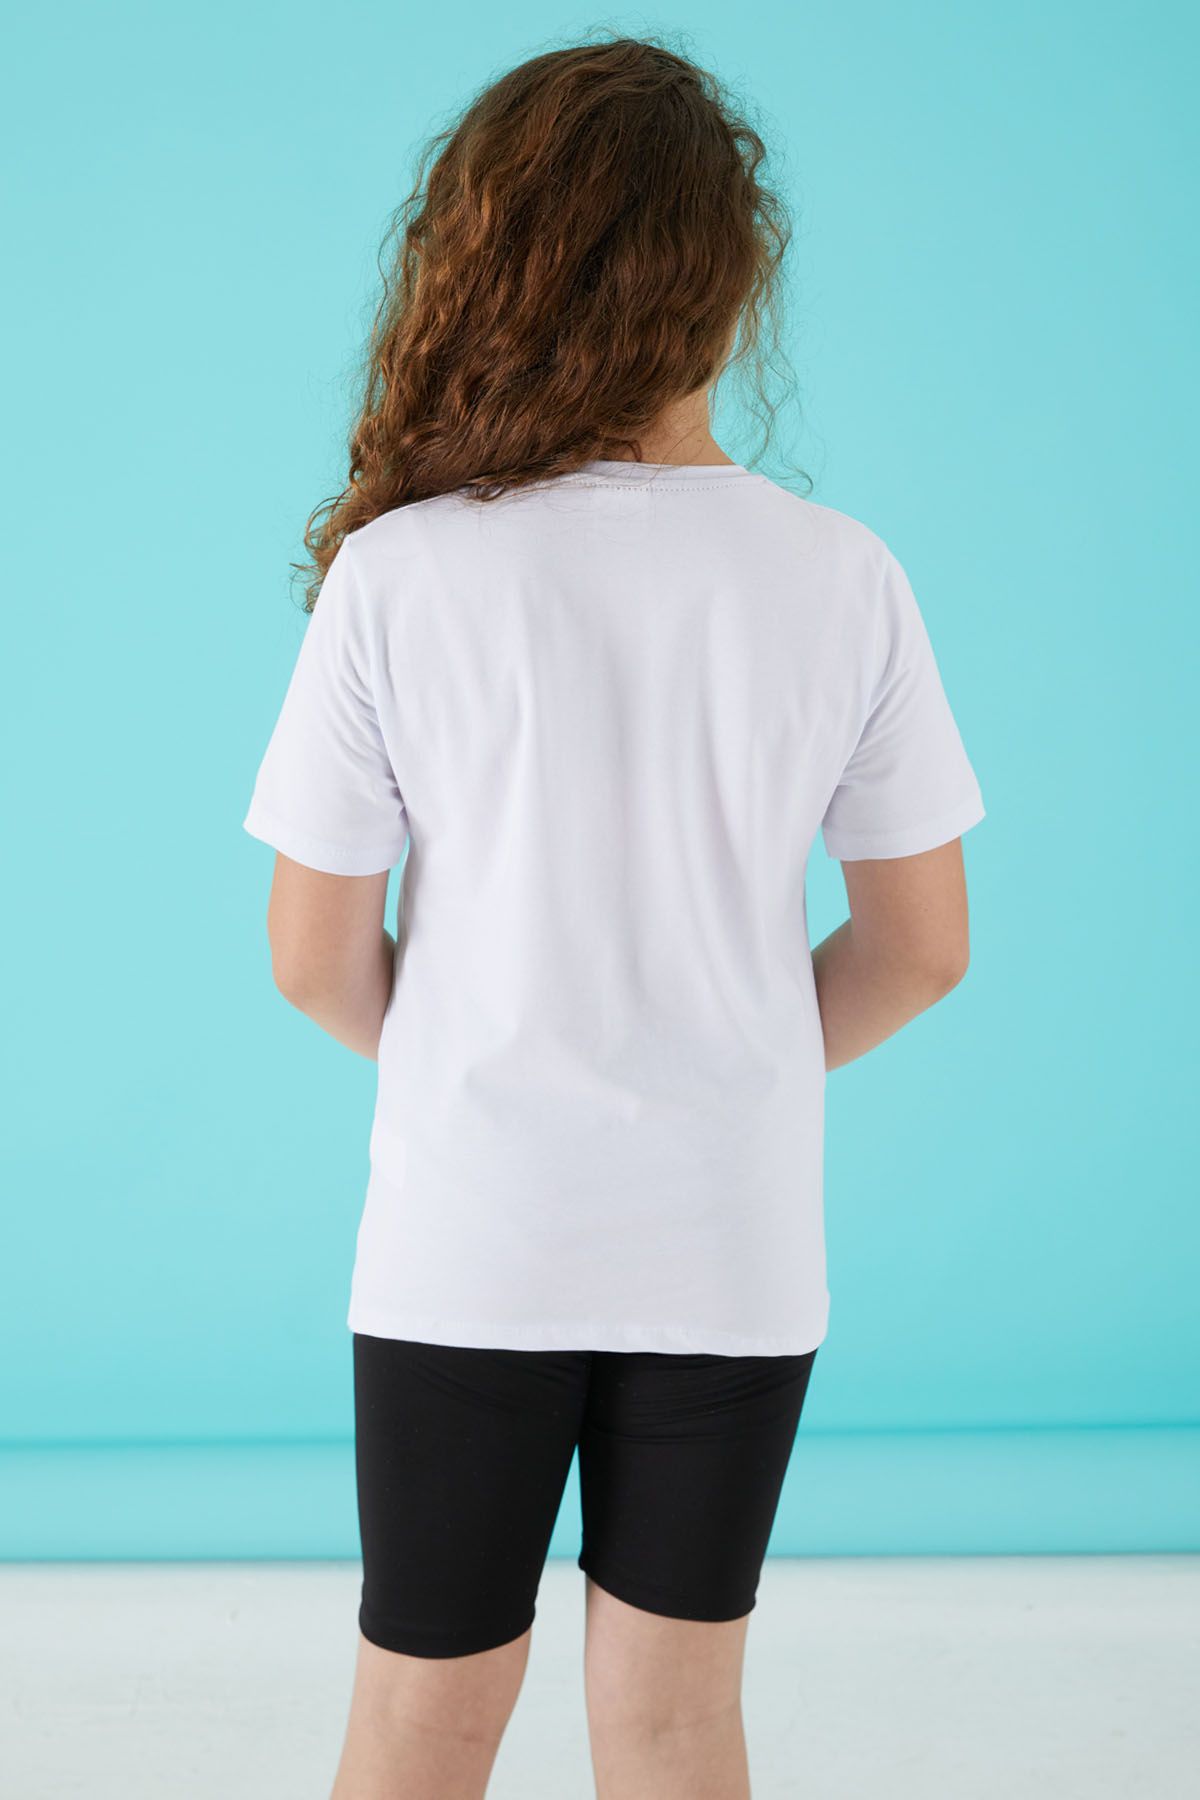 Cansın Mini White Glitter Printed Girls T-Shirt 15658 - Trendyol